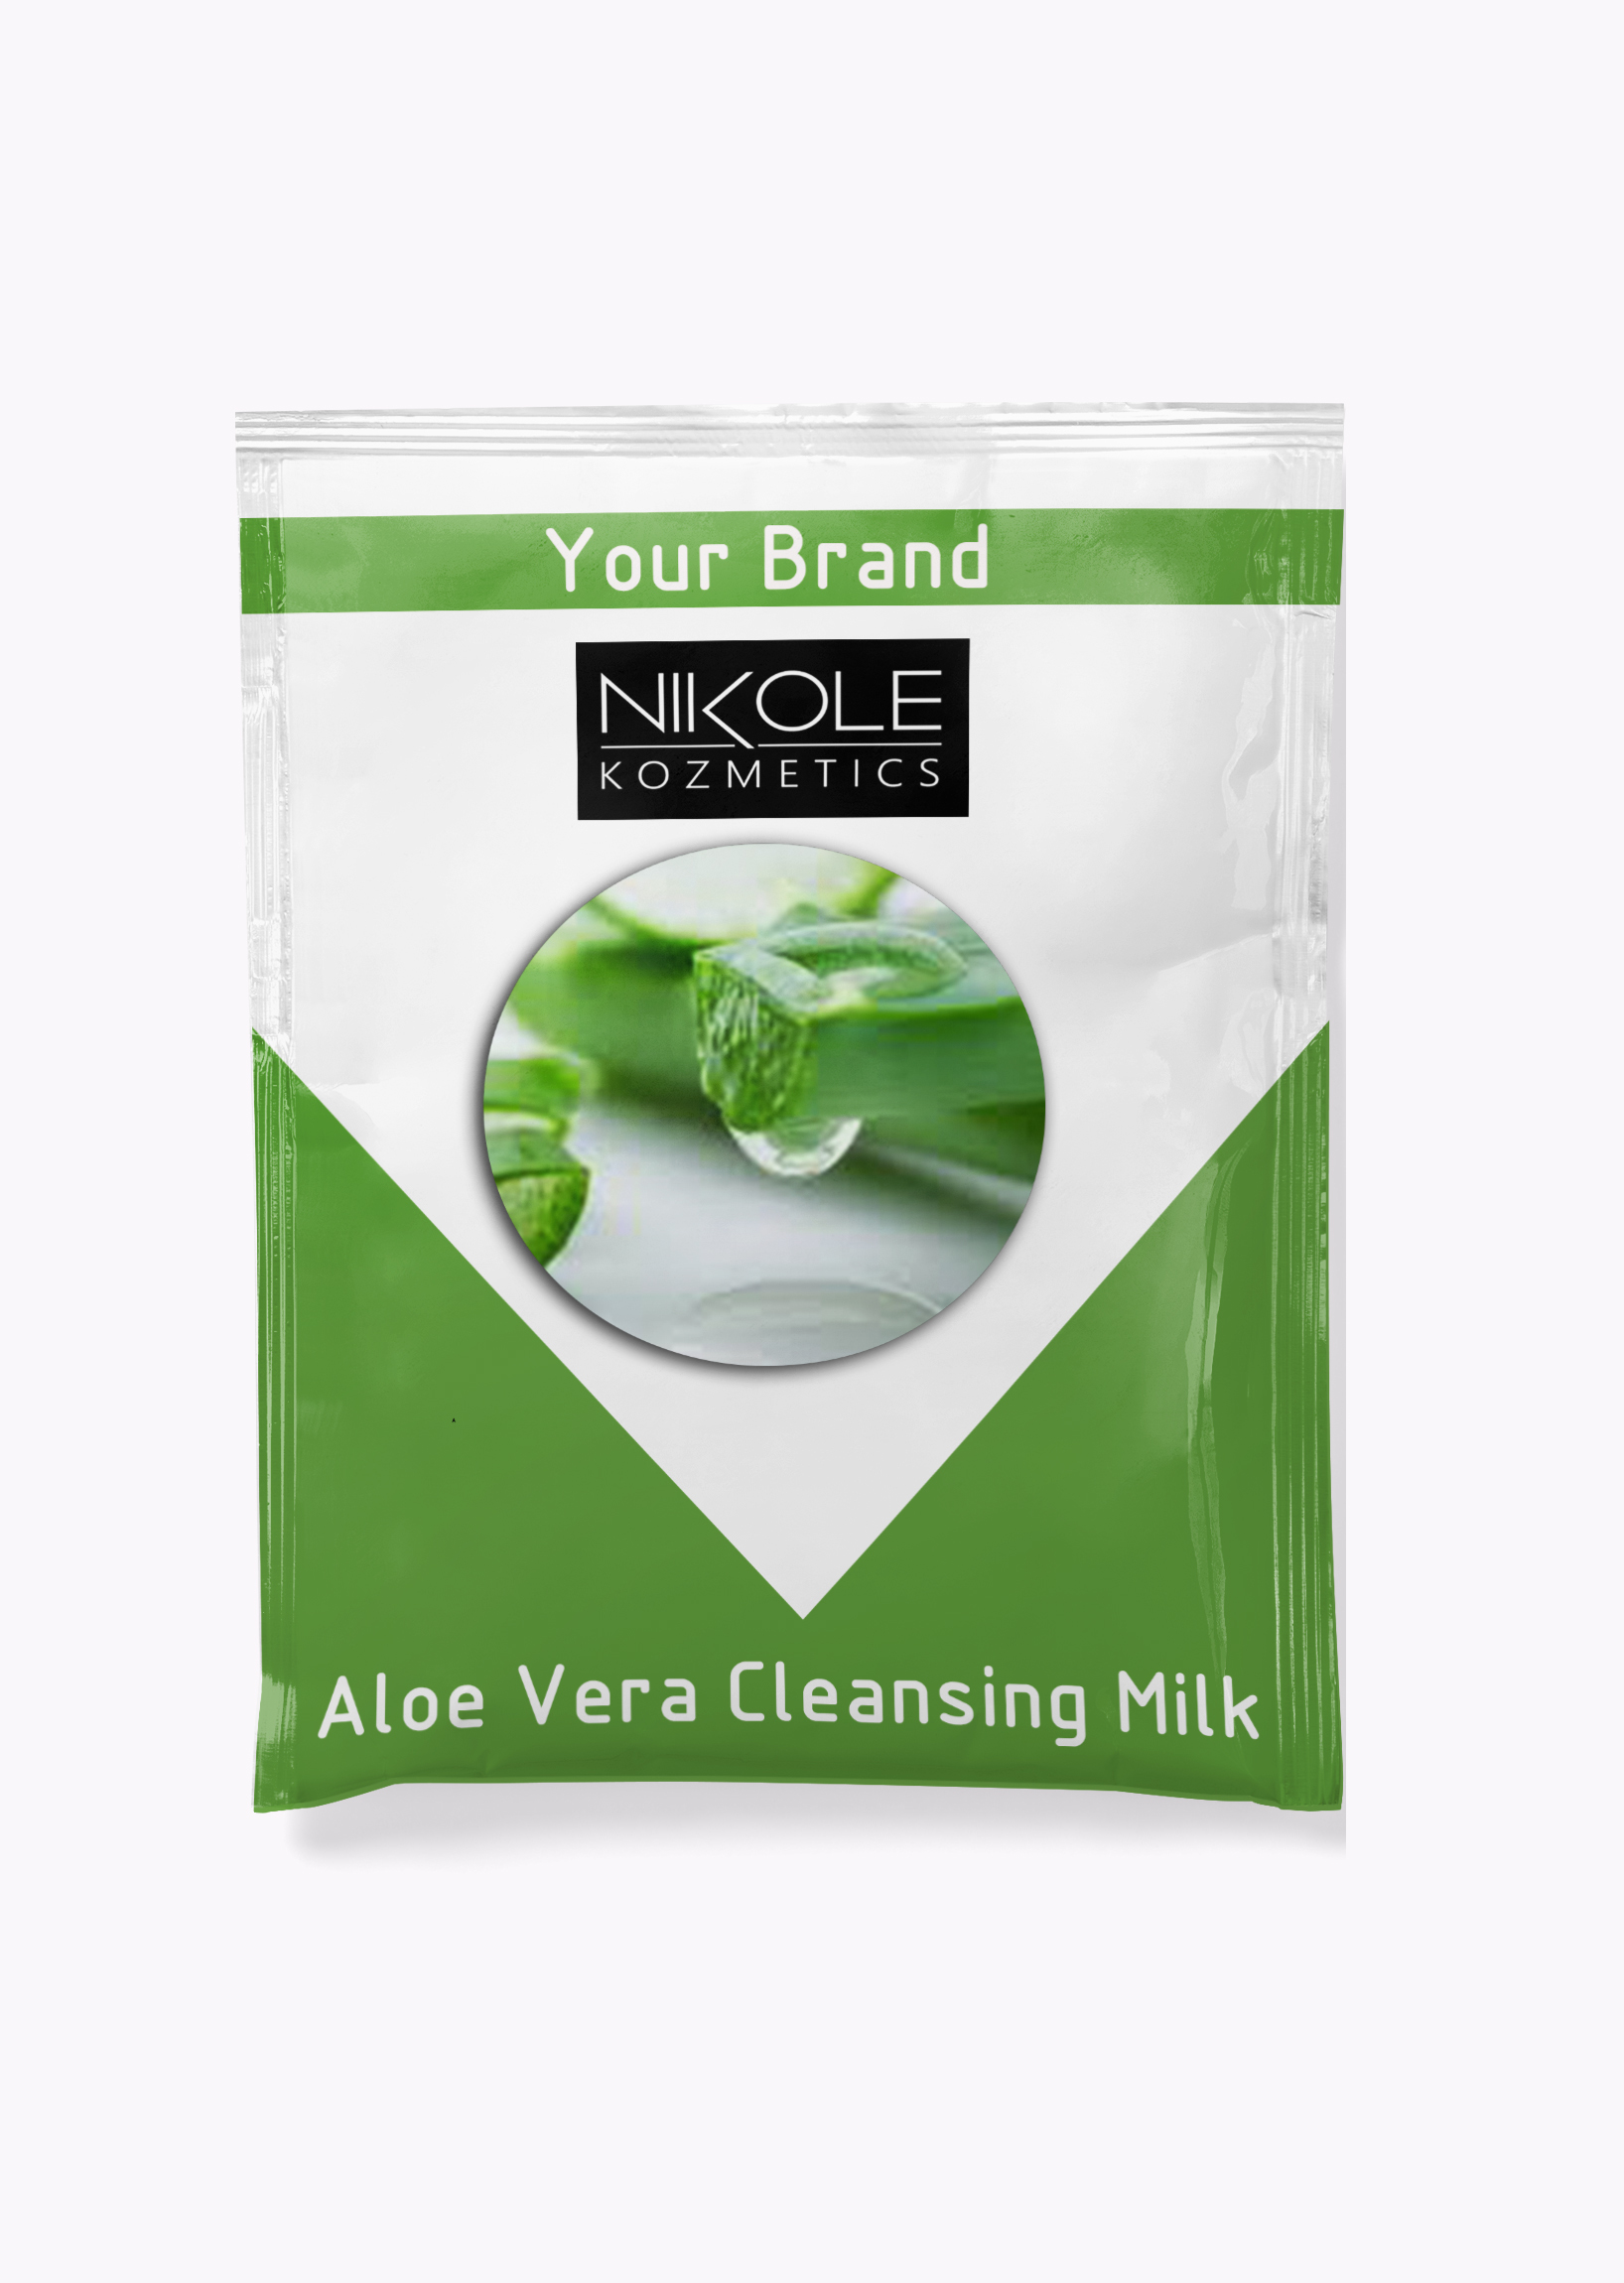 Aloe Vera Cleansing Milk Third Party Manufacturing